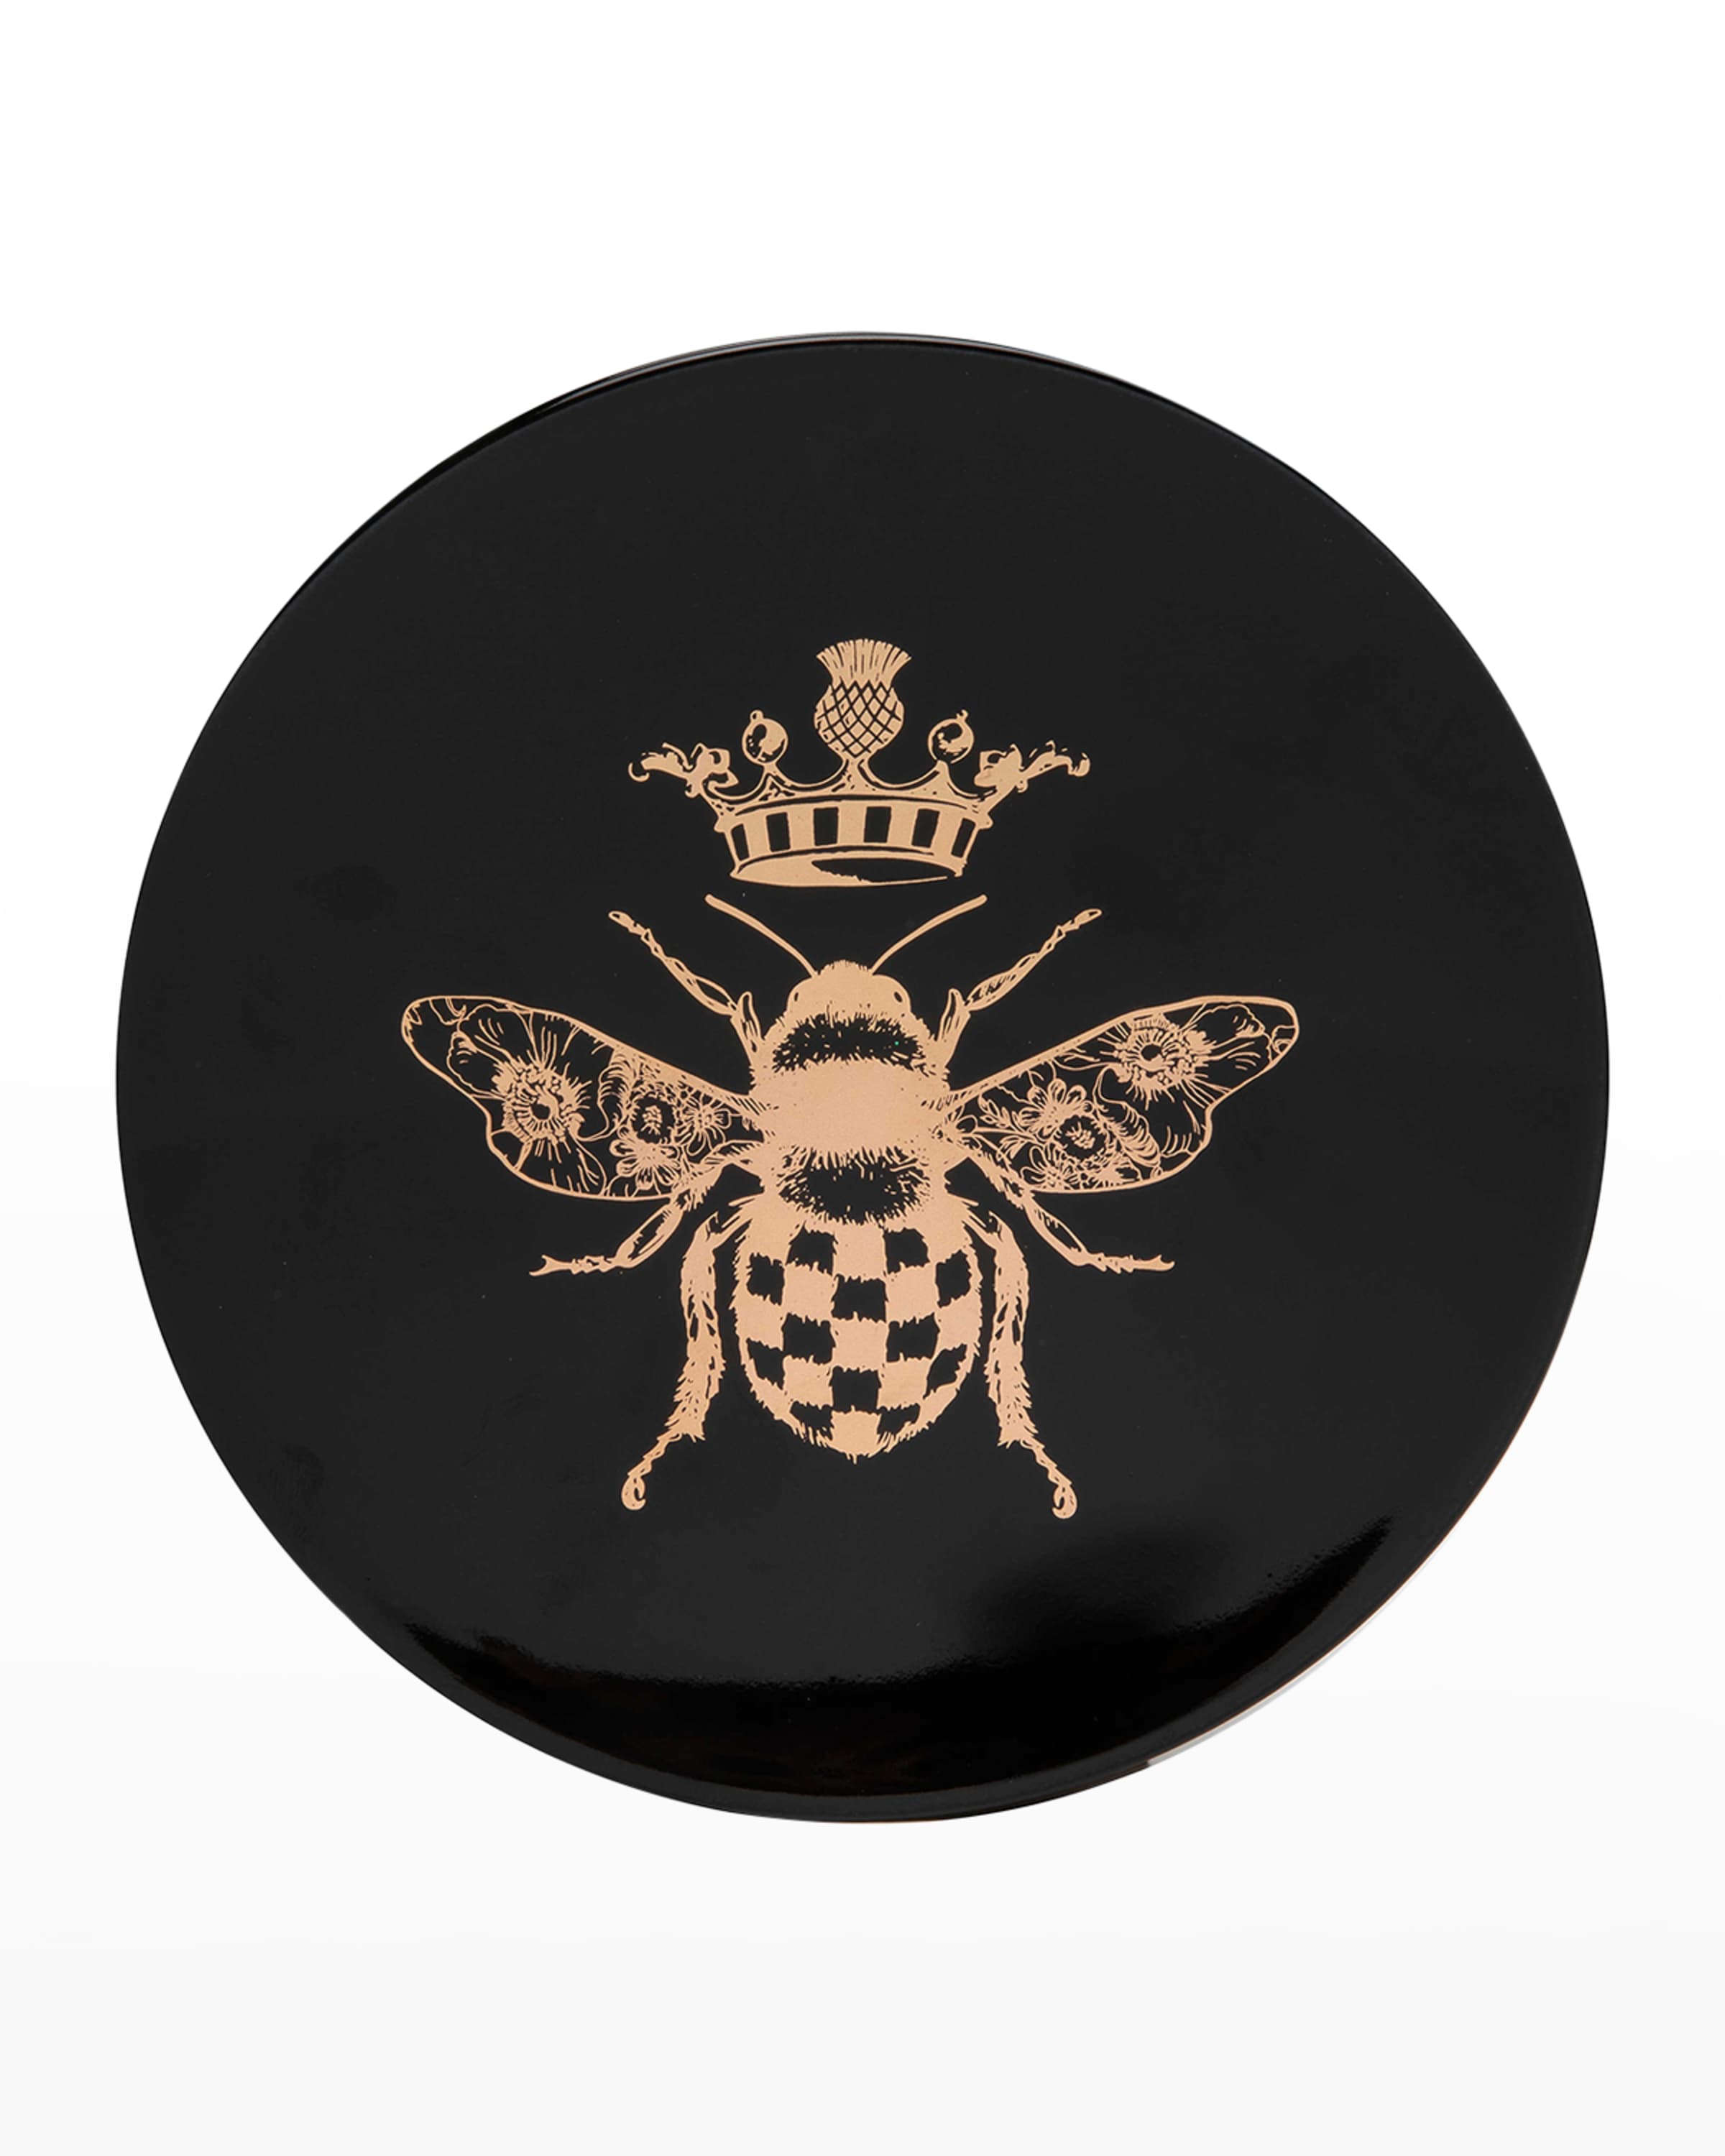 MacKenzie-Childs Queen Bee Dinnerware Collection & Matching Items